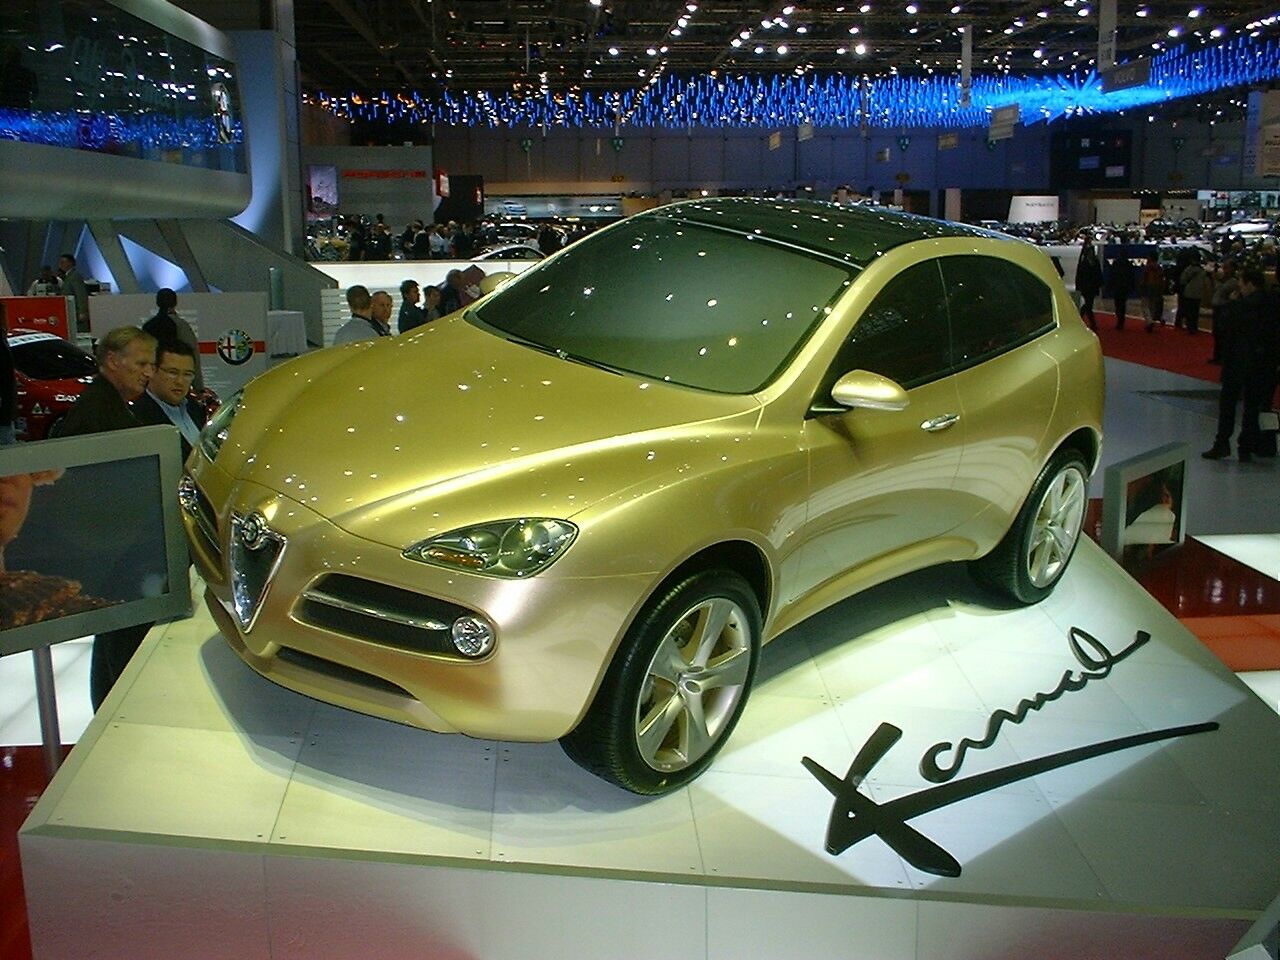 the new Alfa Romeo Kamal crossover concept at the Geneva Motor Show this week